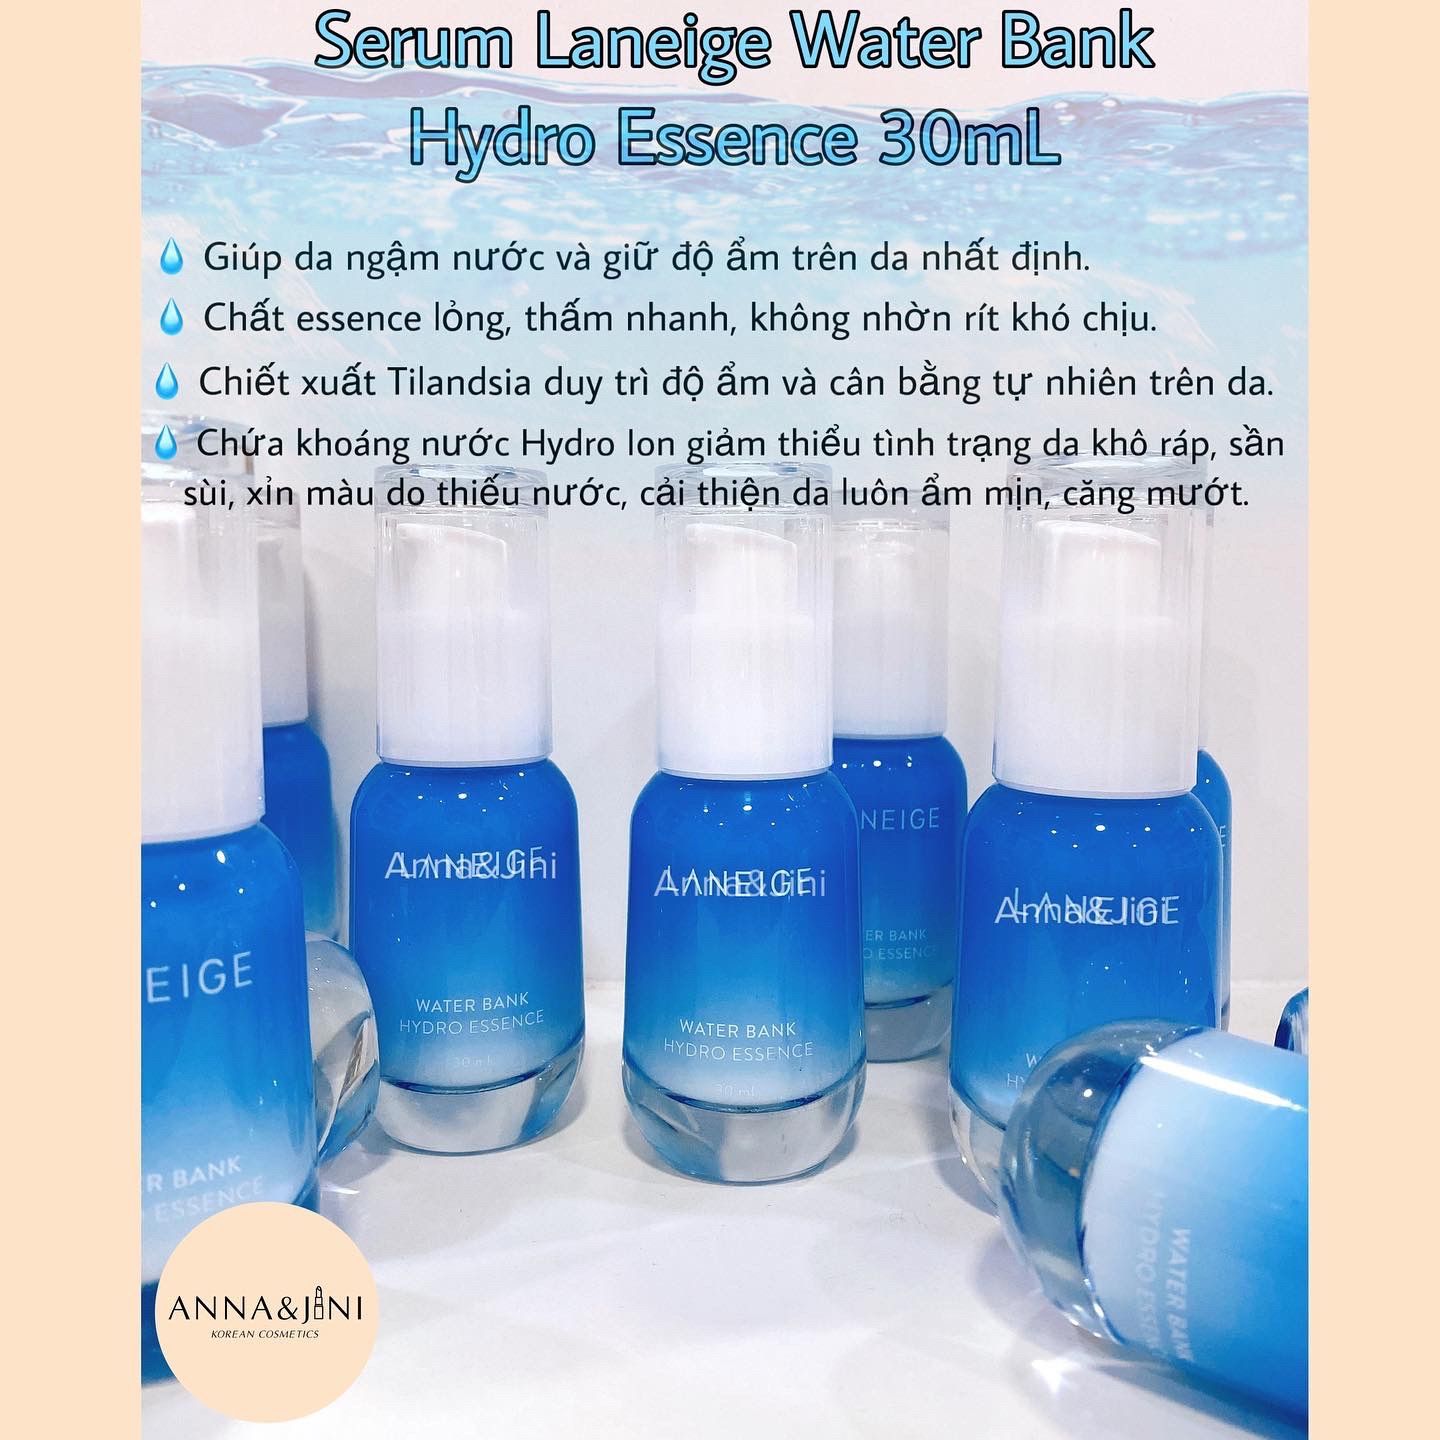  Tinh chất dưỡng ẩm Laneige Water Bank Hydro Essence 30mL 